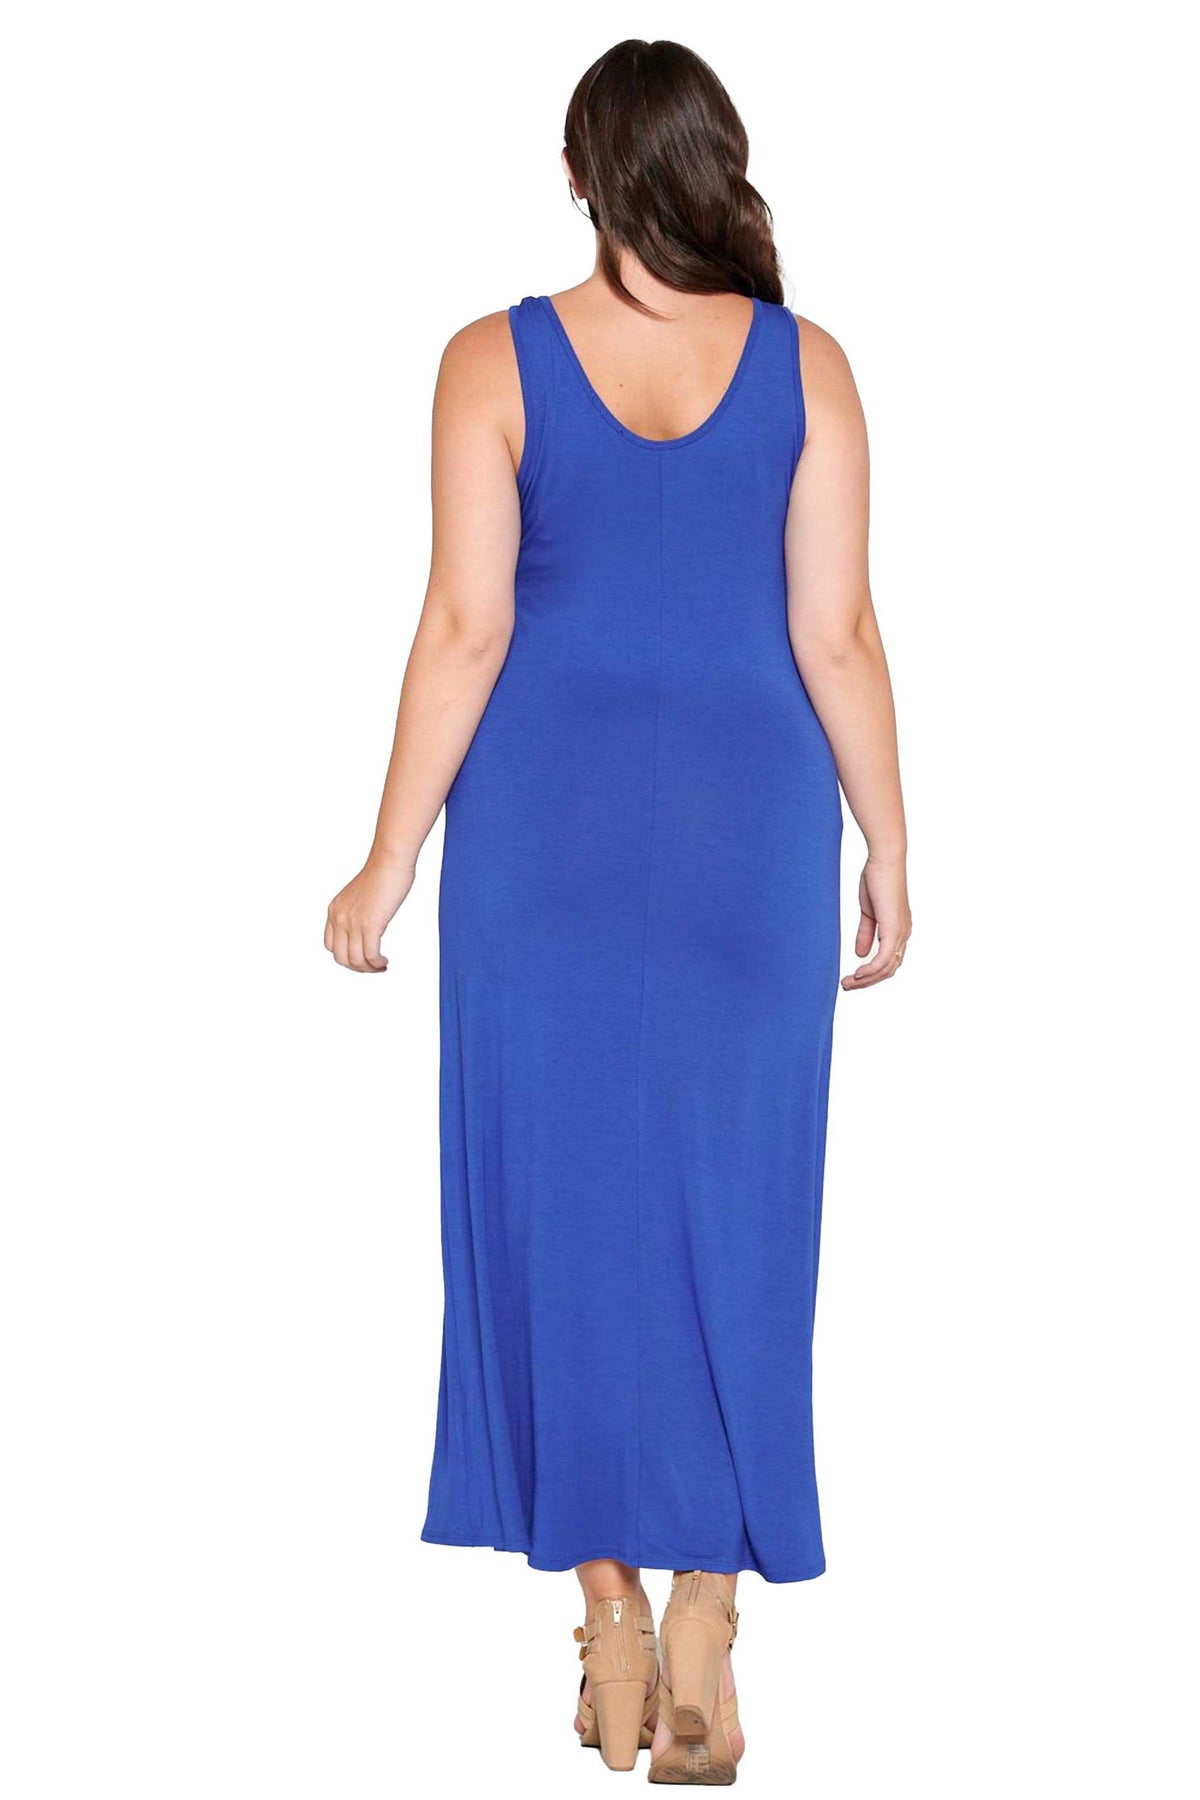 livd L I V D women's trendy contemporary plus size tank sleeveless bodycon midi dress in ink royal blue